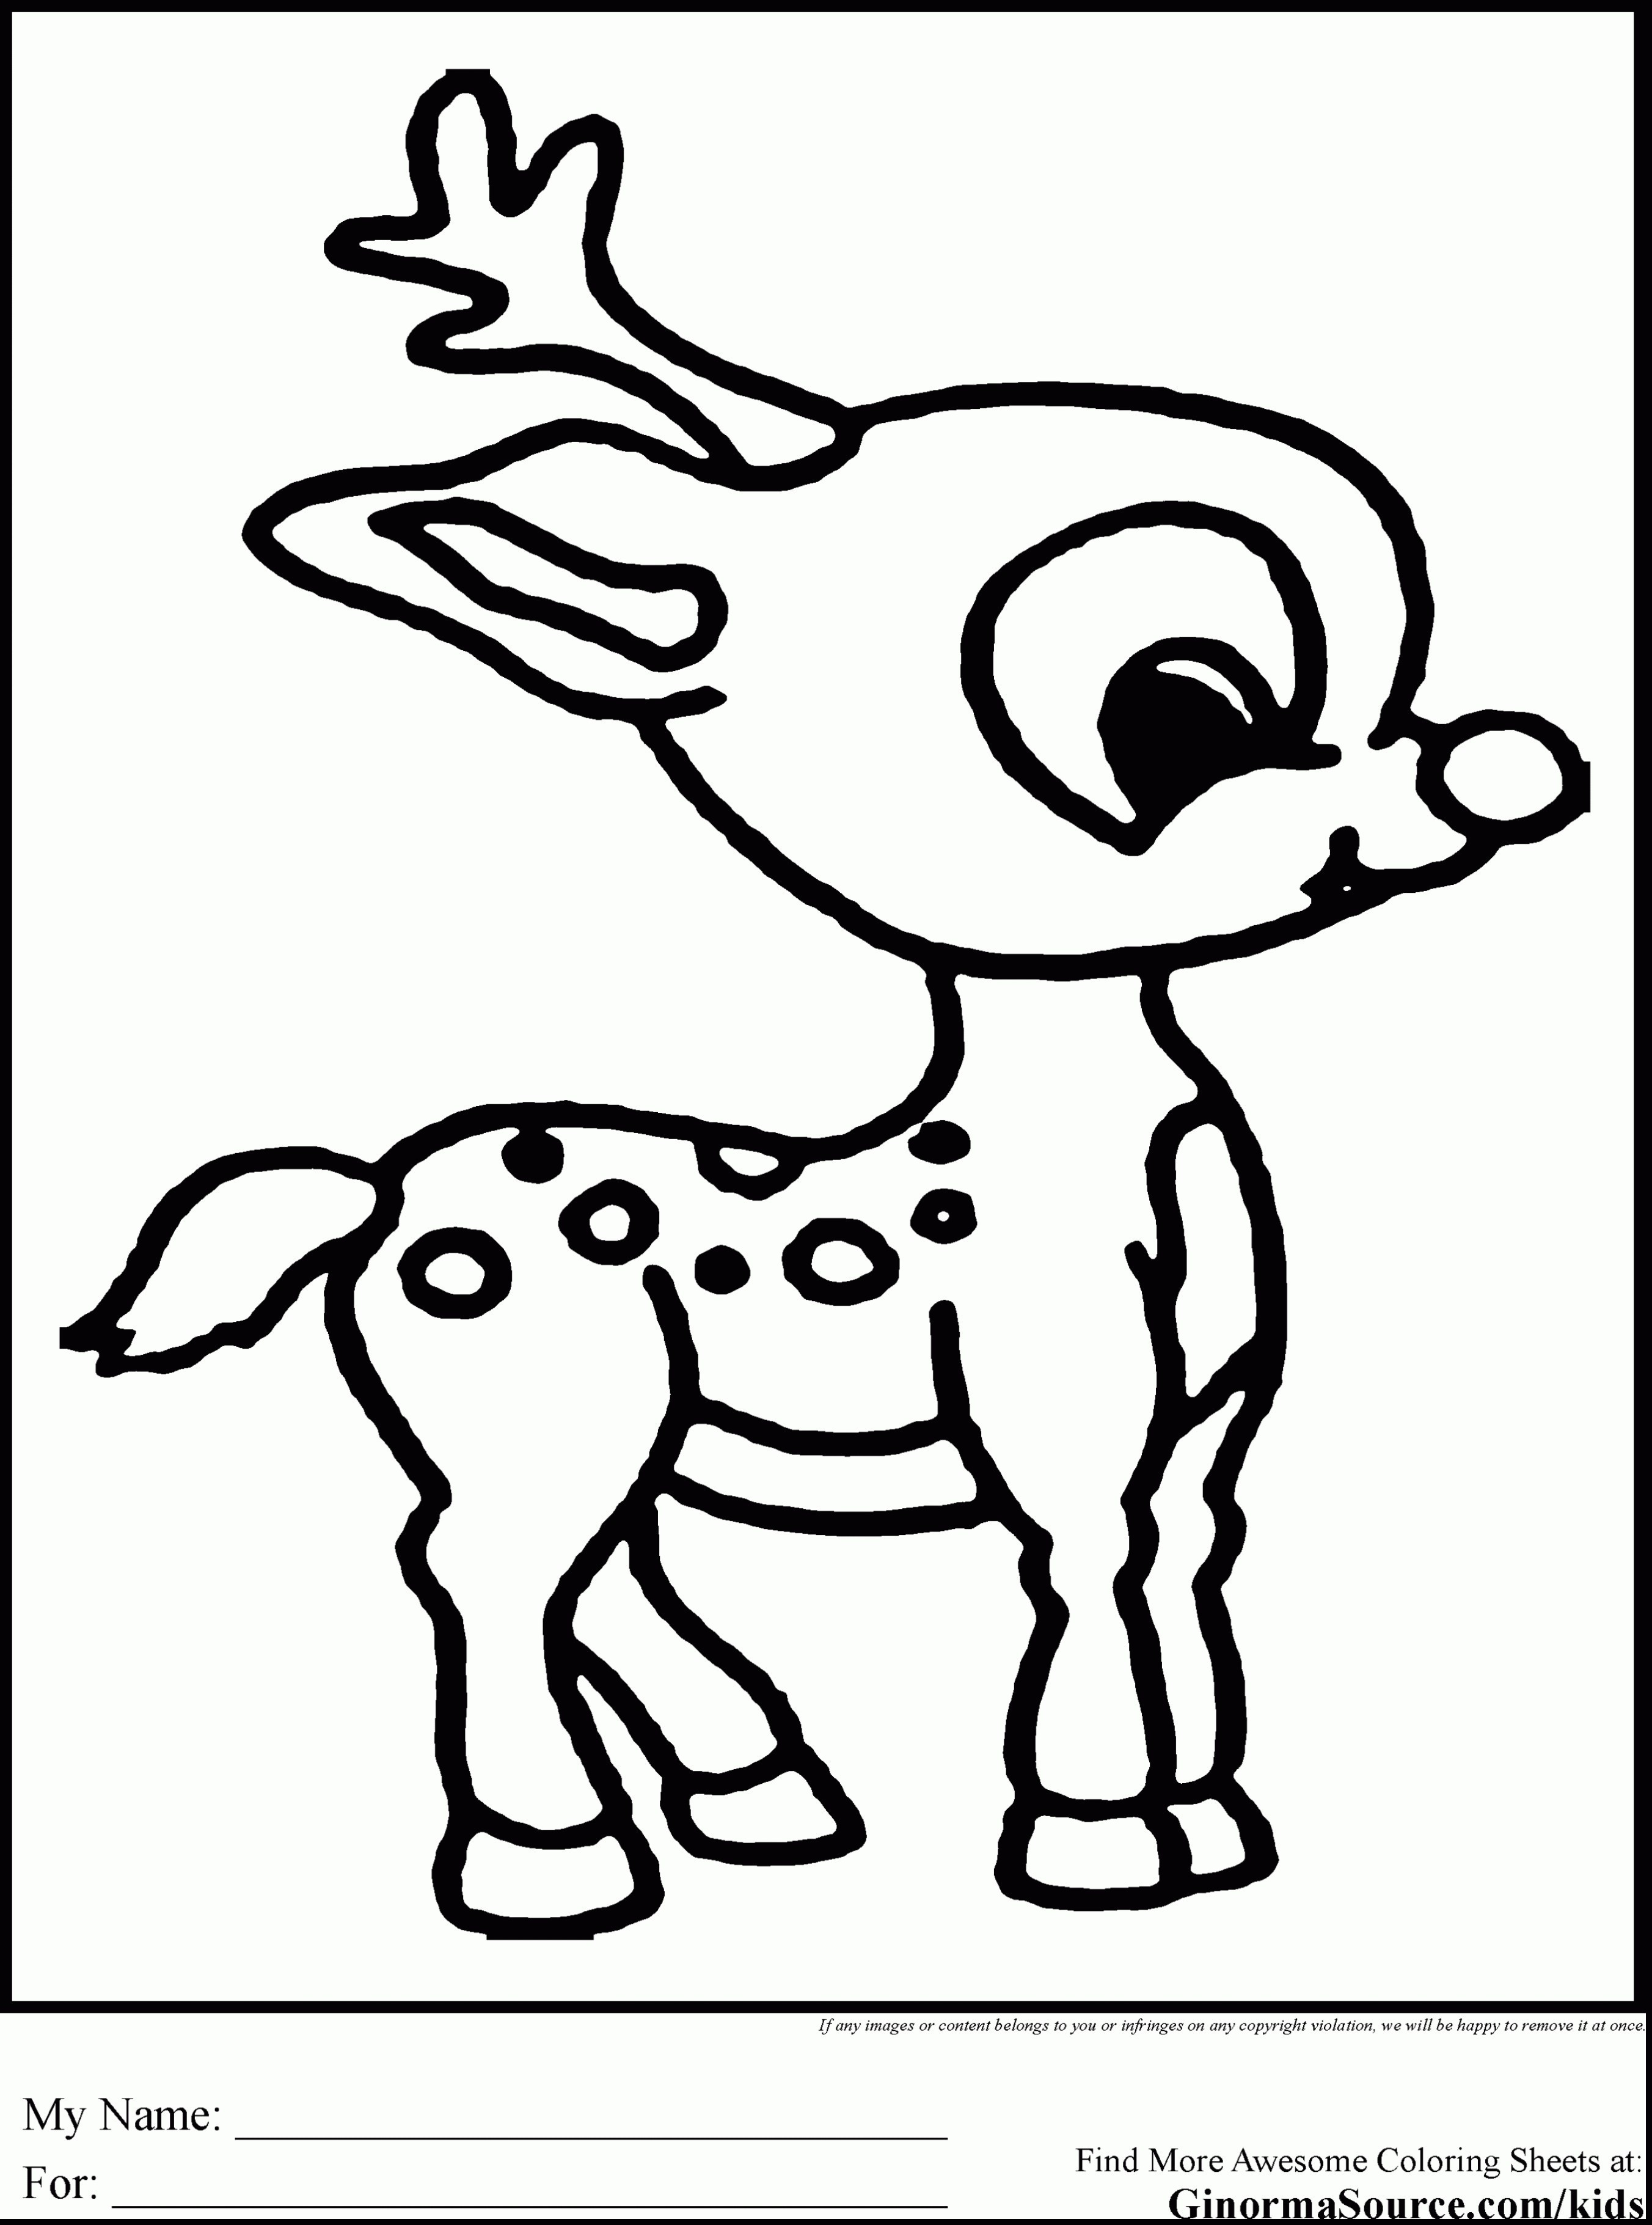 Download Reindeer Cartoon Coloring Pages at GetDrawings.com | Free ...